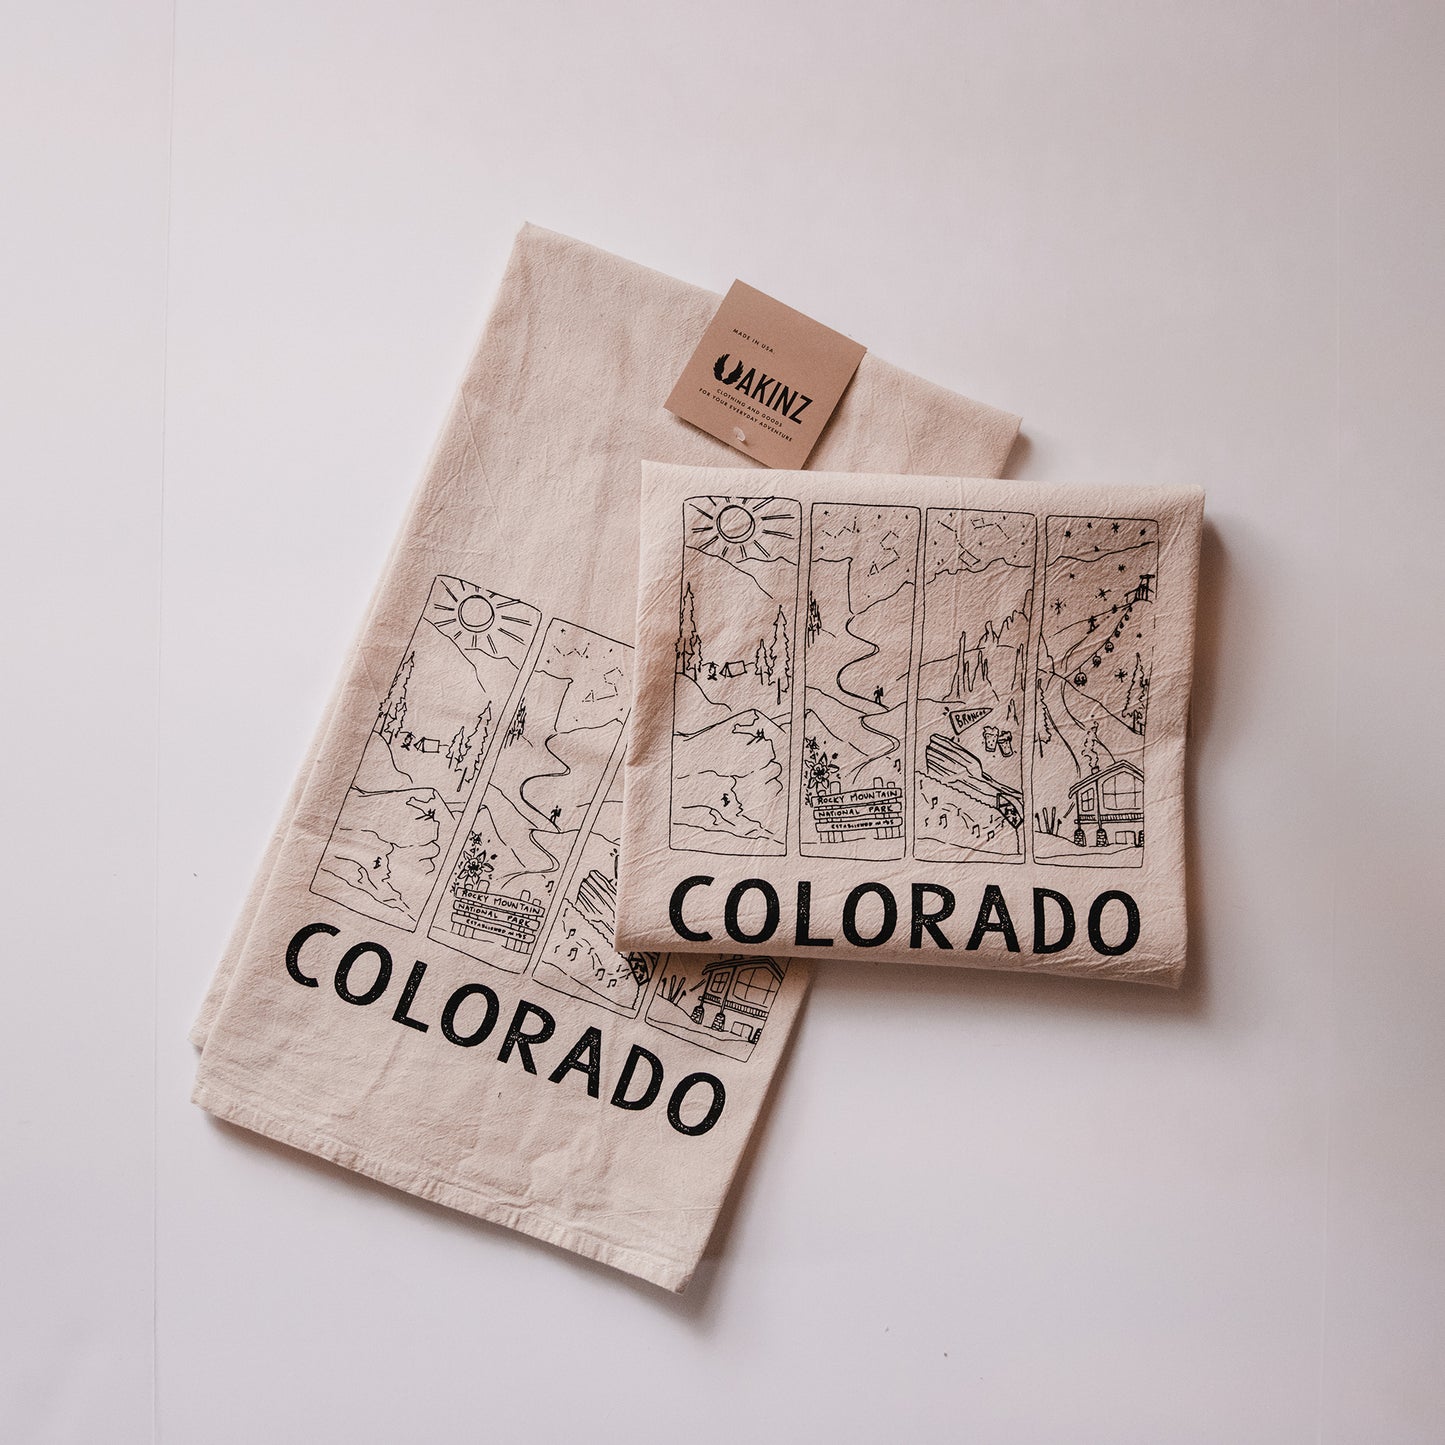 Colorado detailed tea towel screen printed by hand.